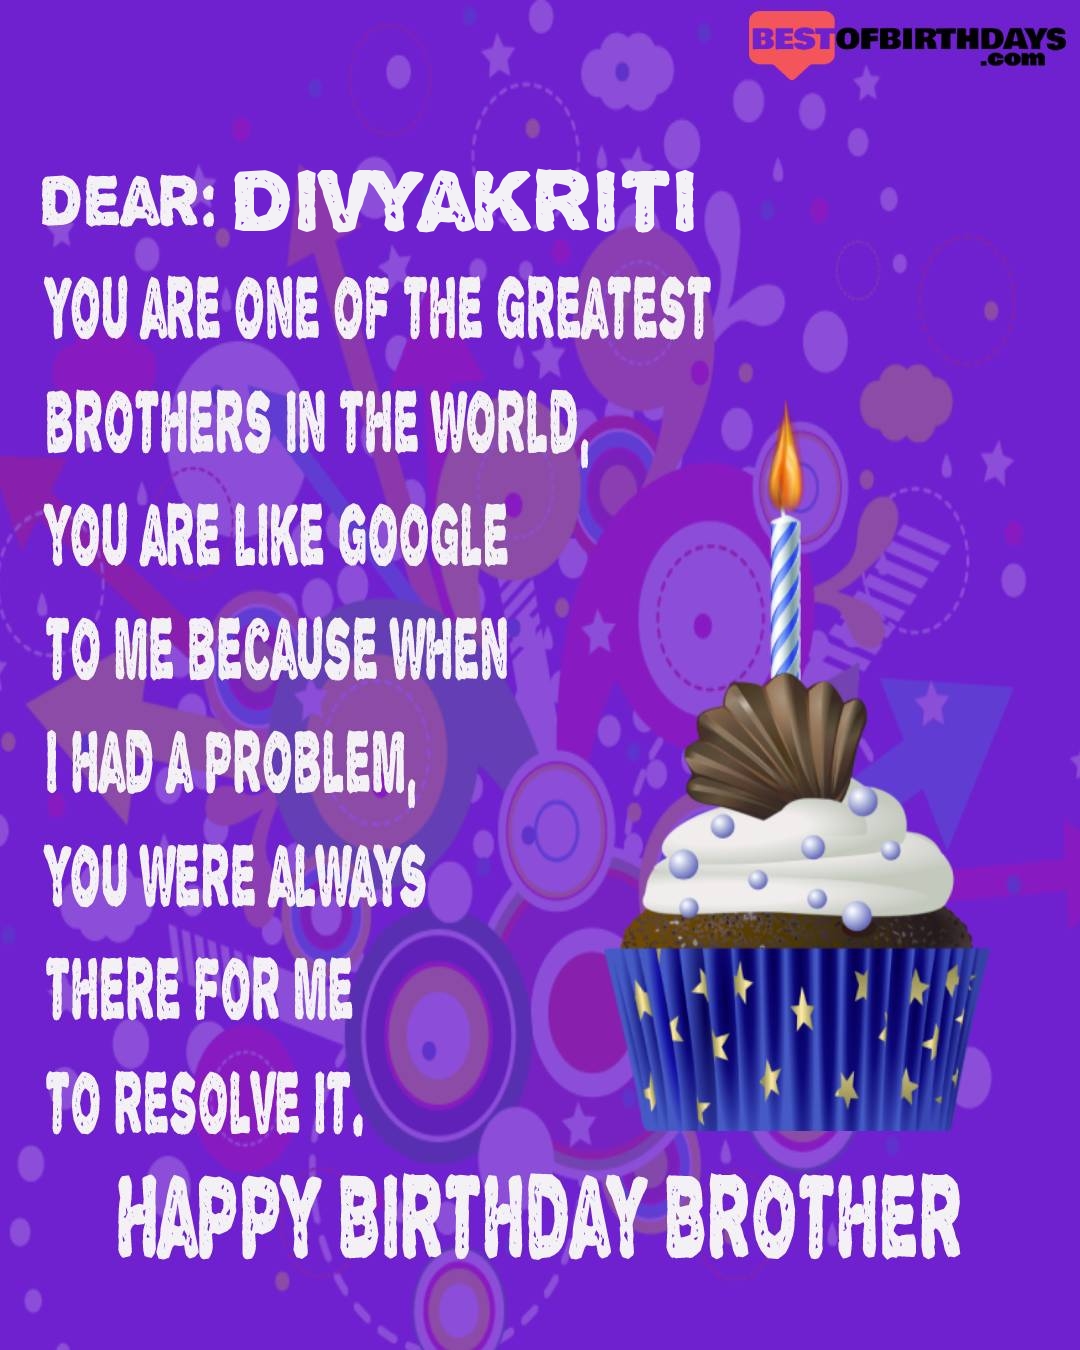 Happy birthday divyakriti bhai brother bro